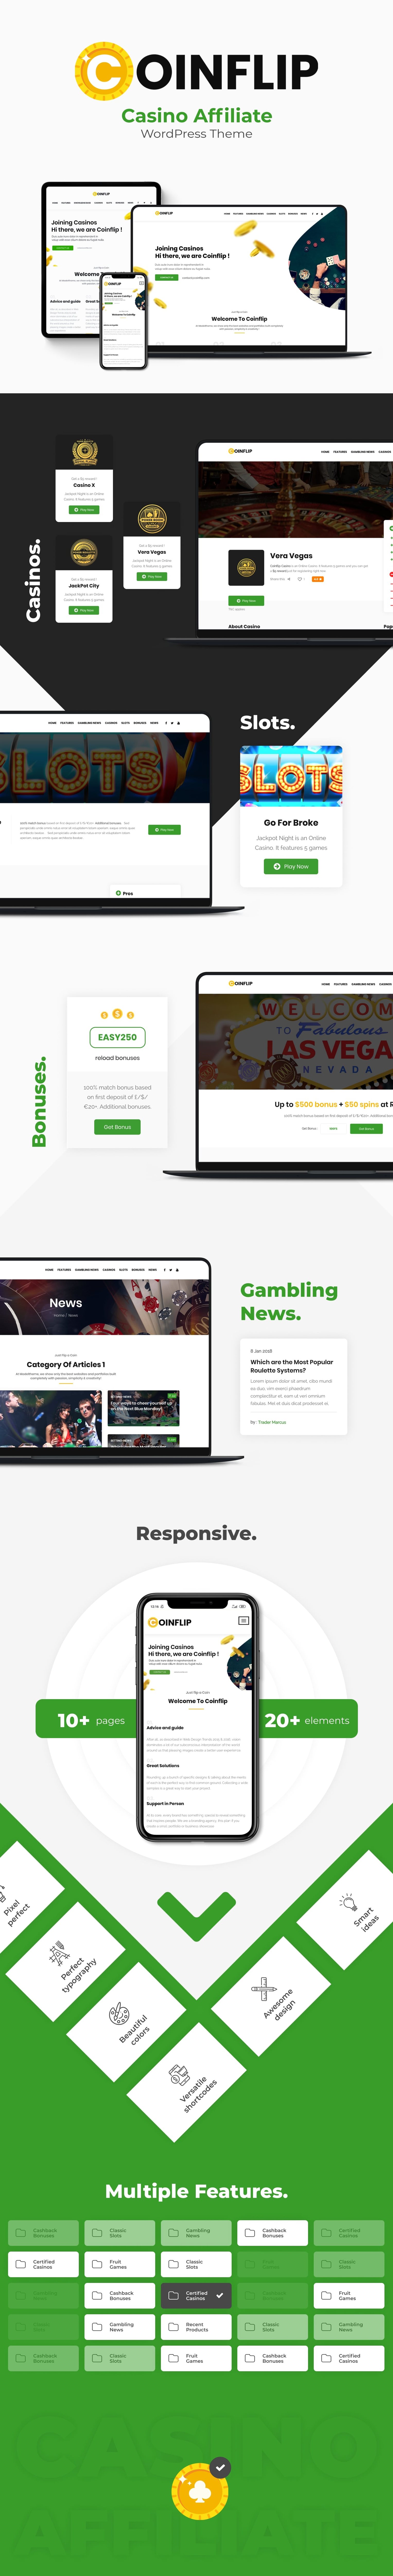 Coinflip - Casino Affiliate WordPress Theme - 1